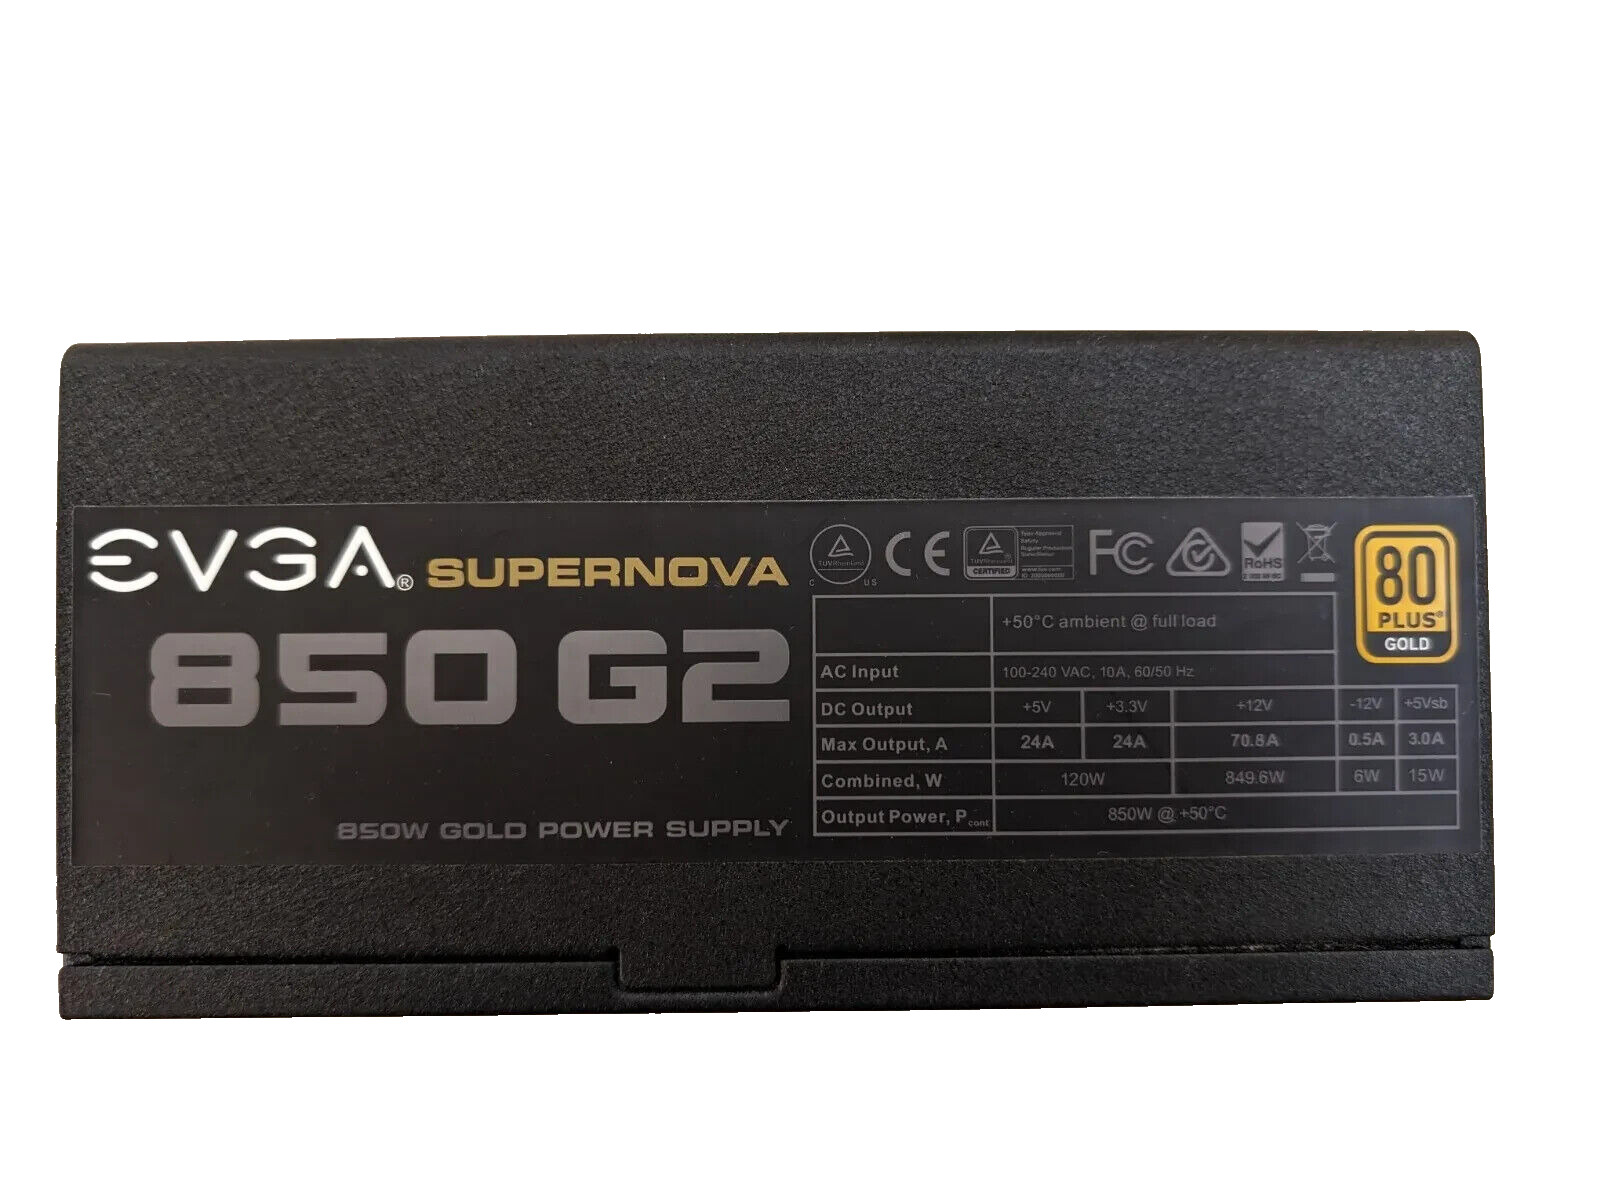 EVGA SUPERNOVA 850 G2 850W PSU Power Supply 80+ GOLD, Fully Modular